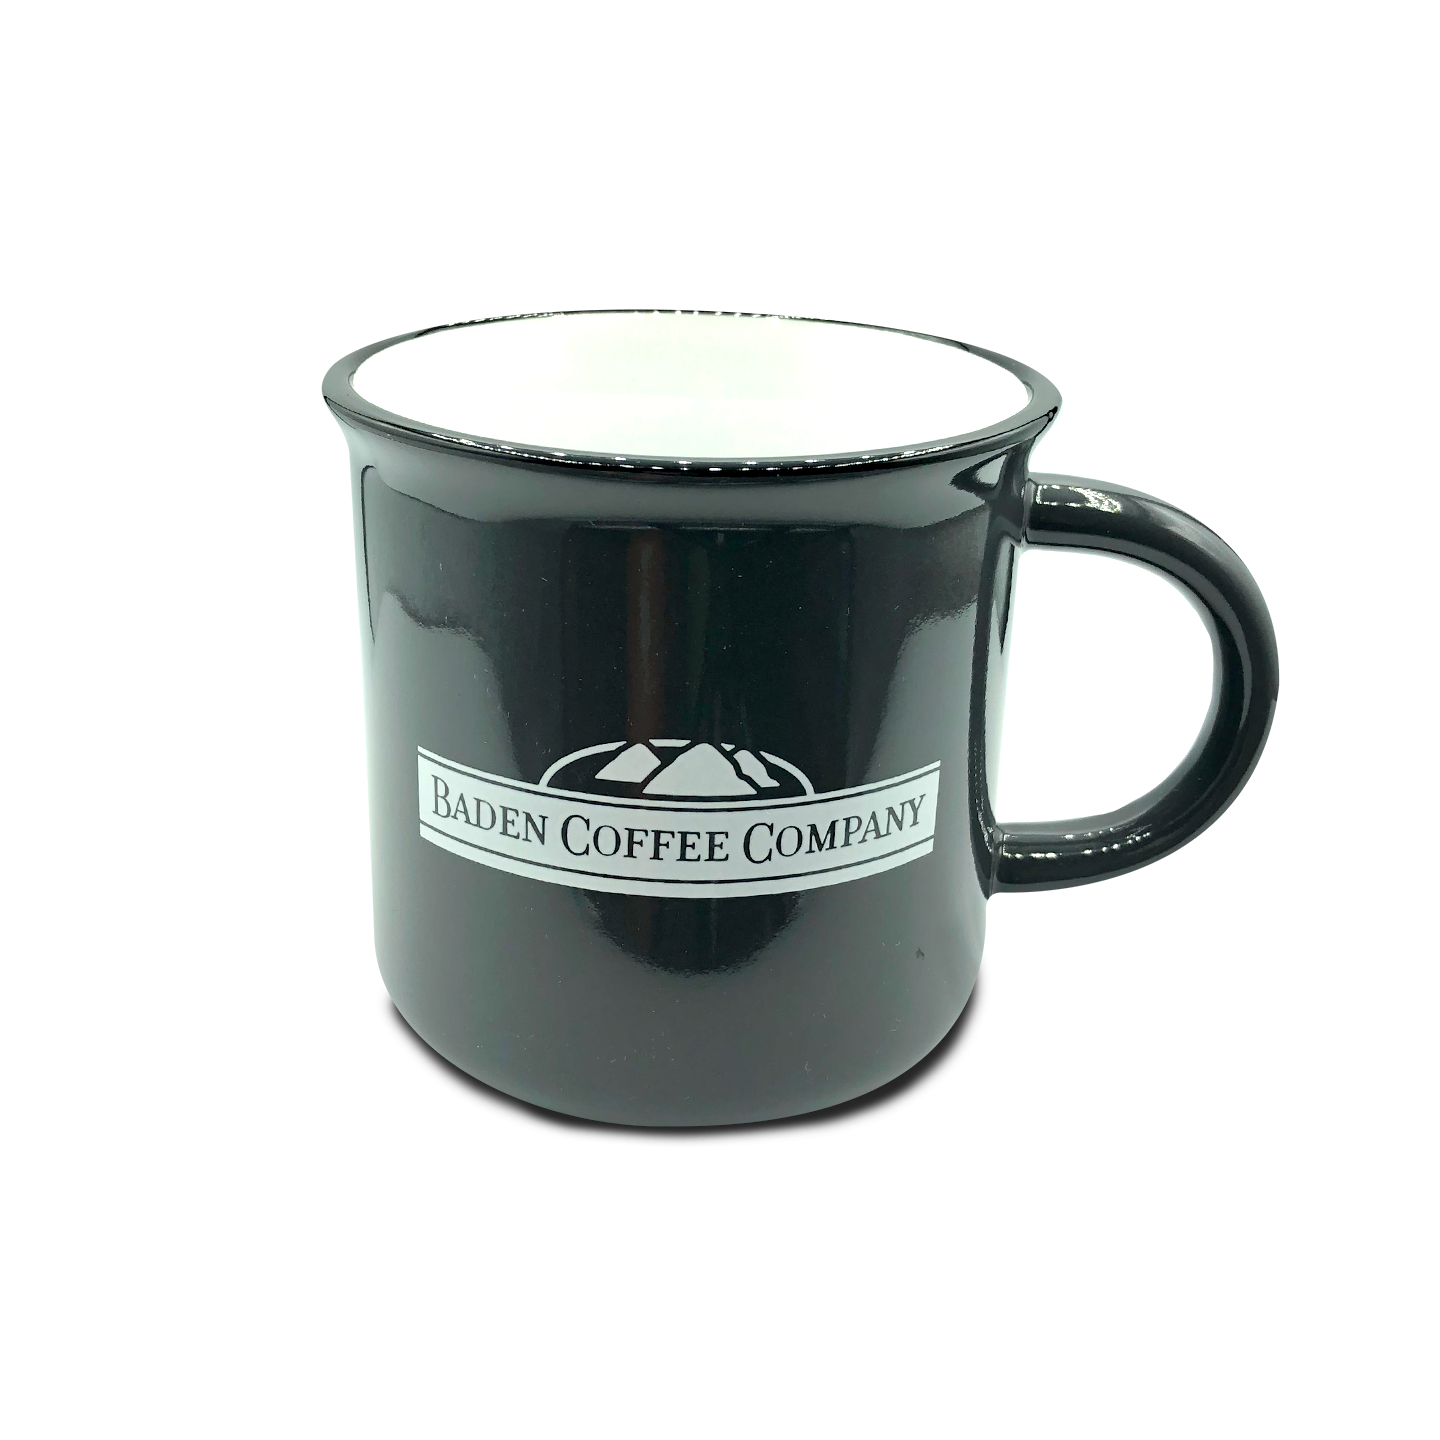 Baden Coffee Company Ceramic Mugs - Campfire Style